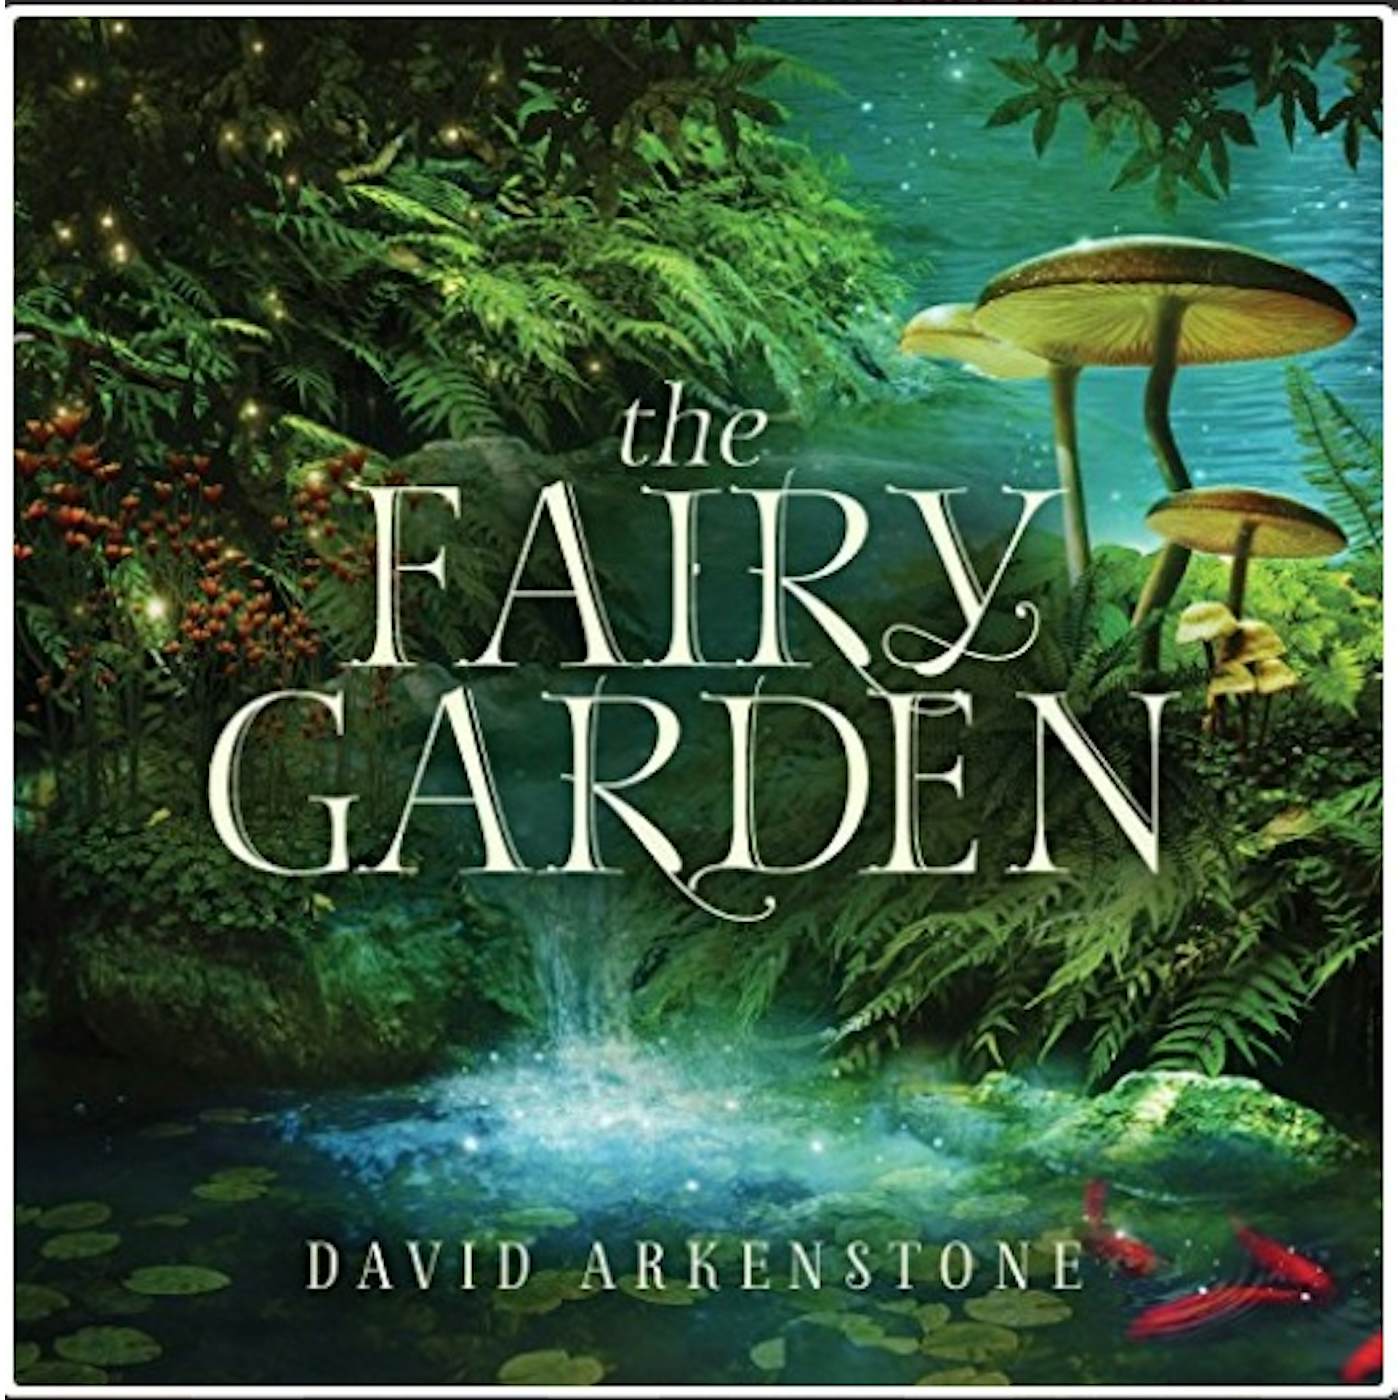 David Arkenstone FAIRY GARDEN CD